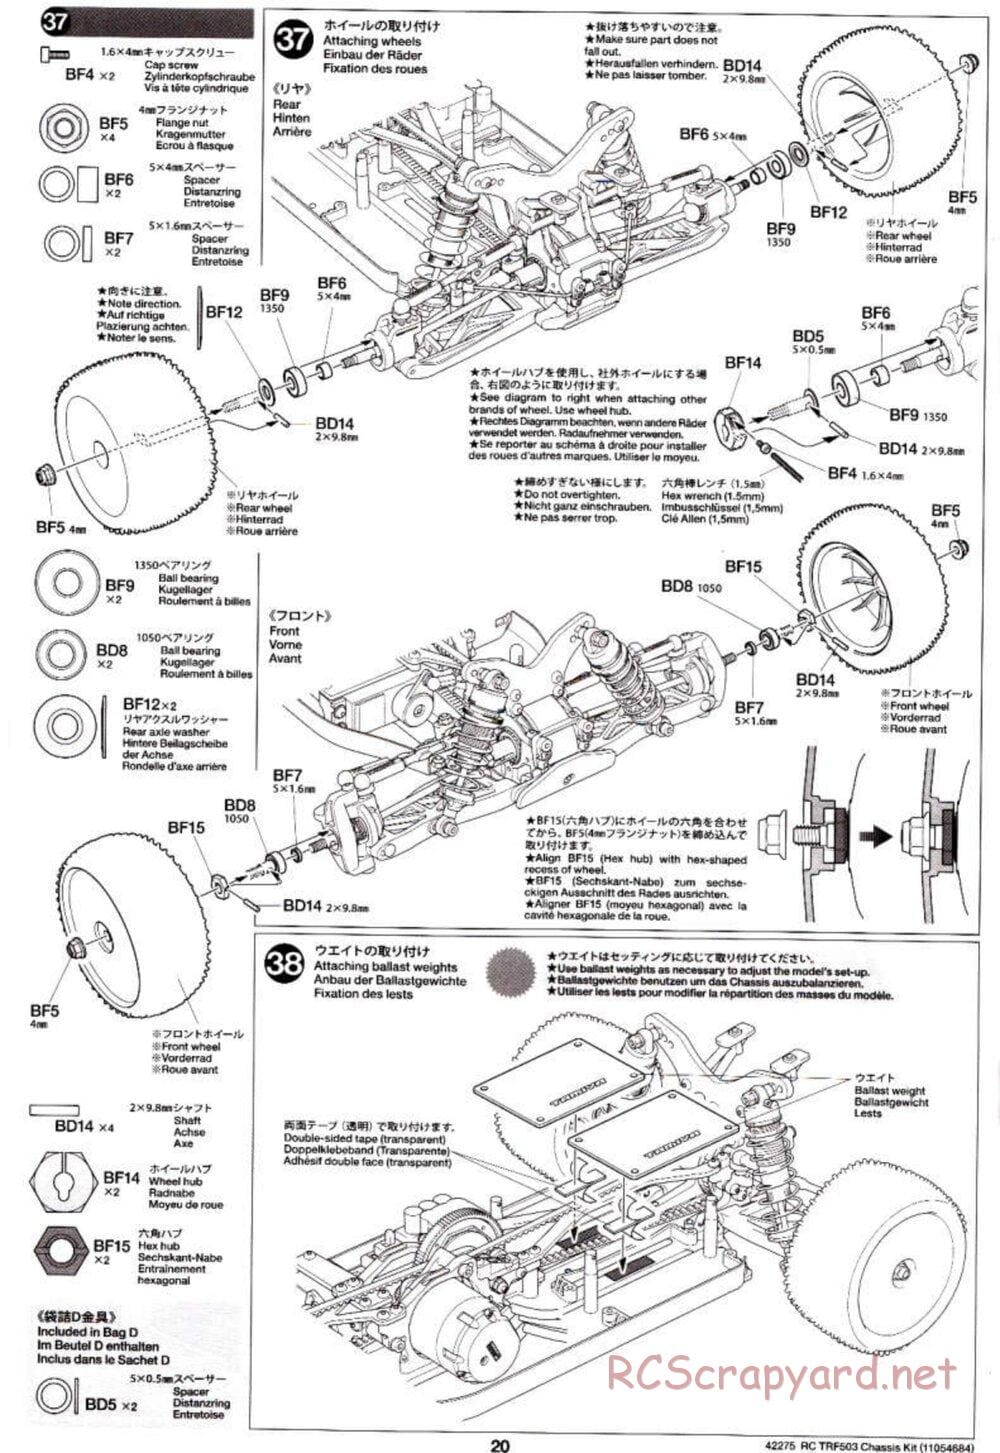 Tamiya - TRF503 Chassis - Manual - Page 20